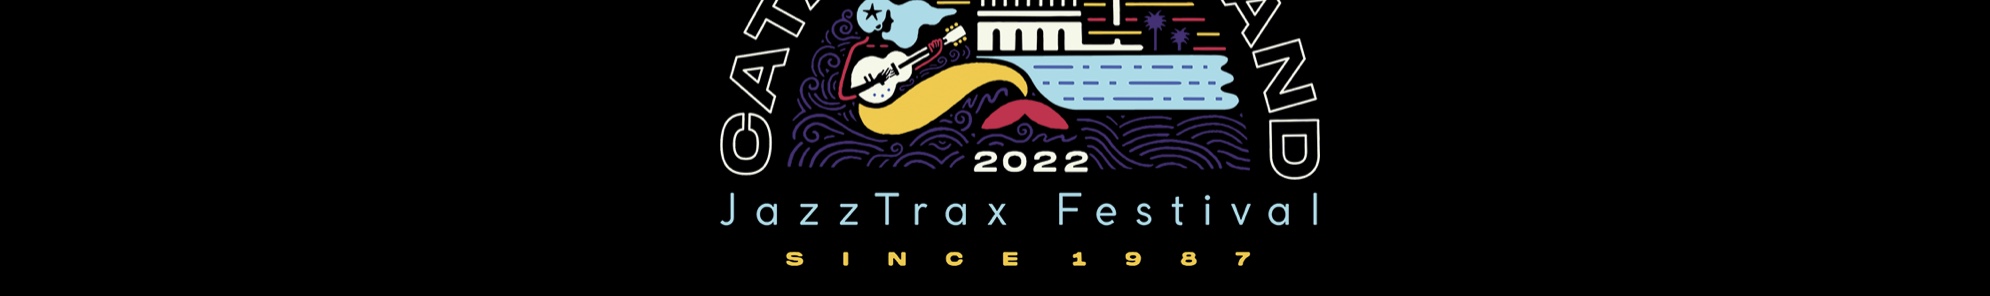 Catalina Island JazzTrax Festival 2022 Tickets